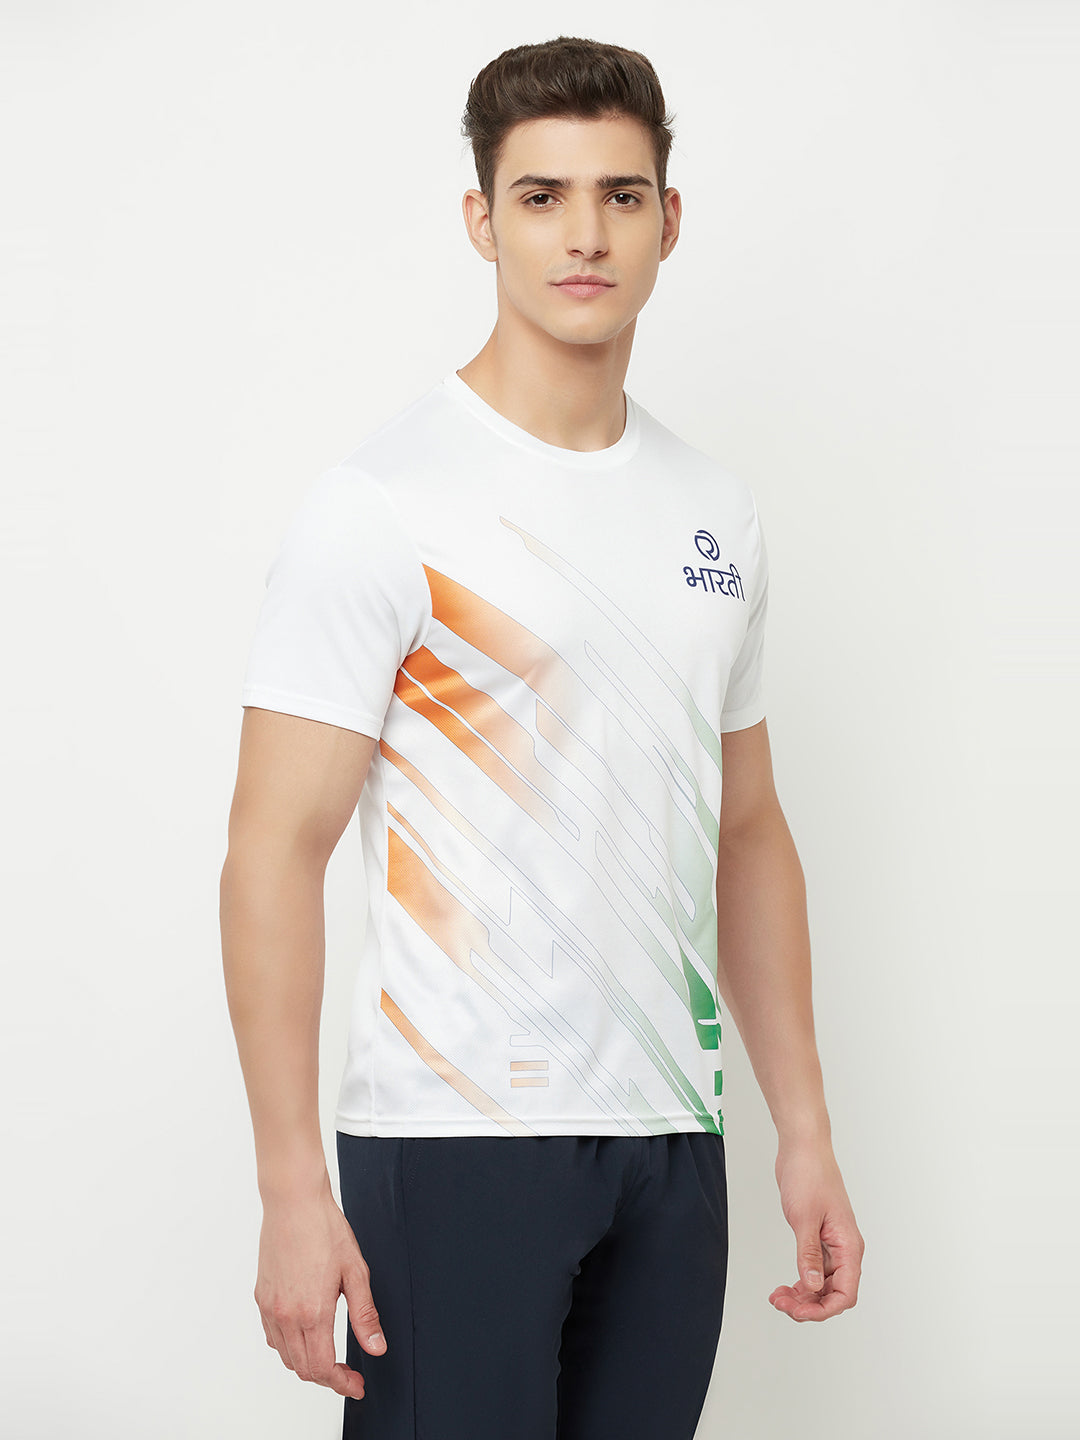 Men's reflective dryfit tshirt with flow graphics